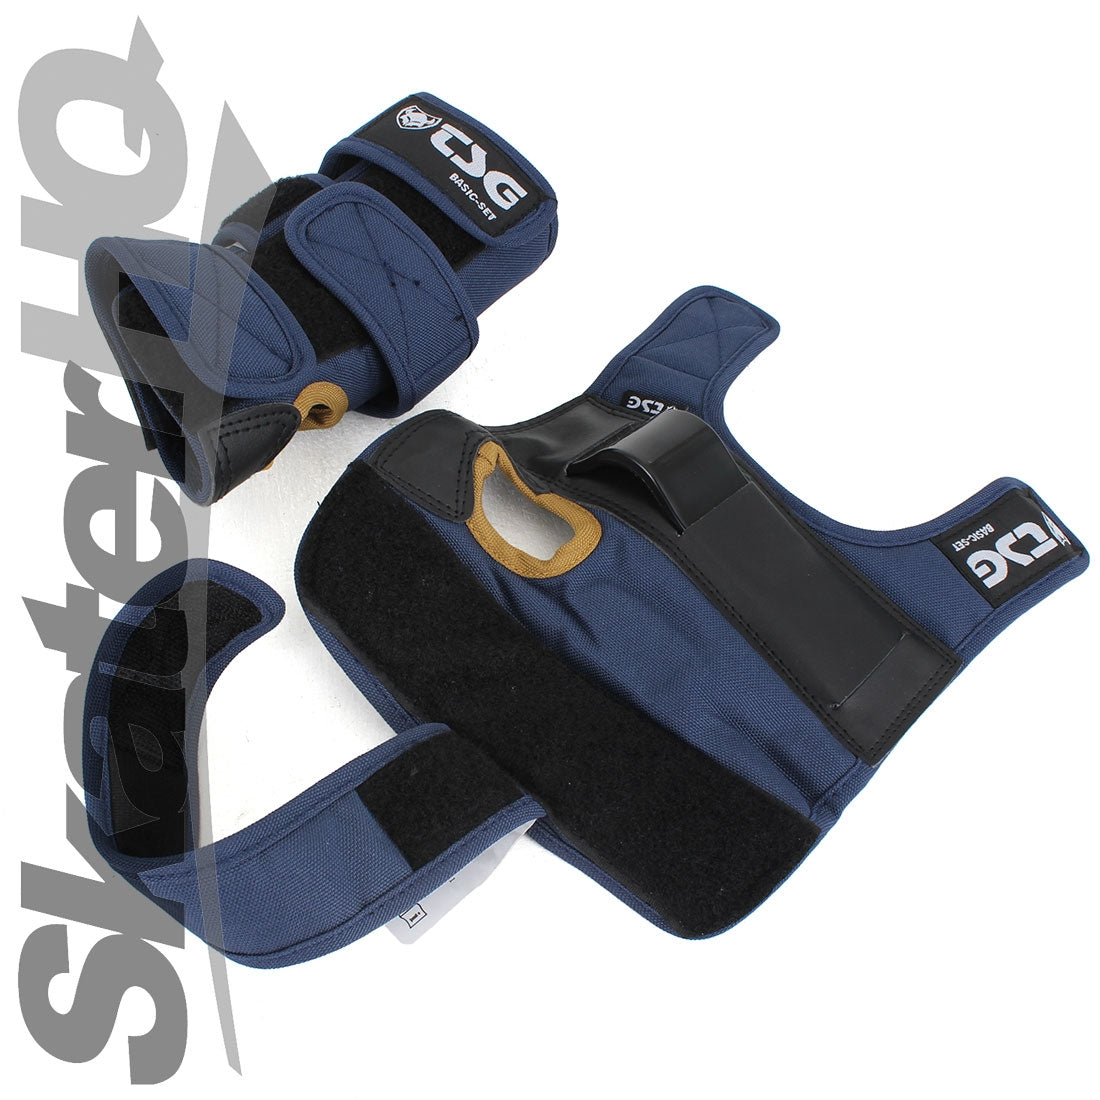 TSG Basic Skate Set Navy/Tan - Small Protective Gear